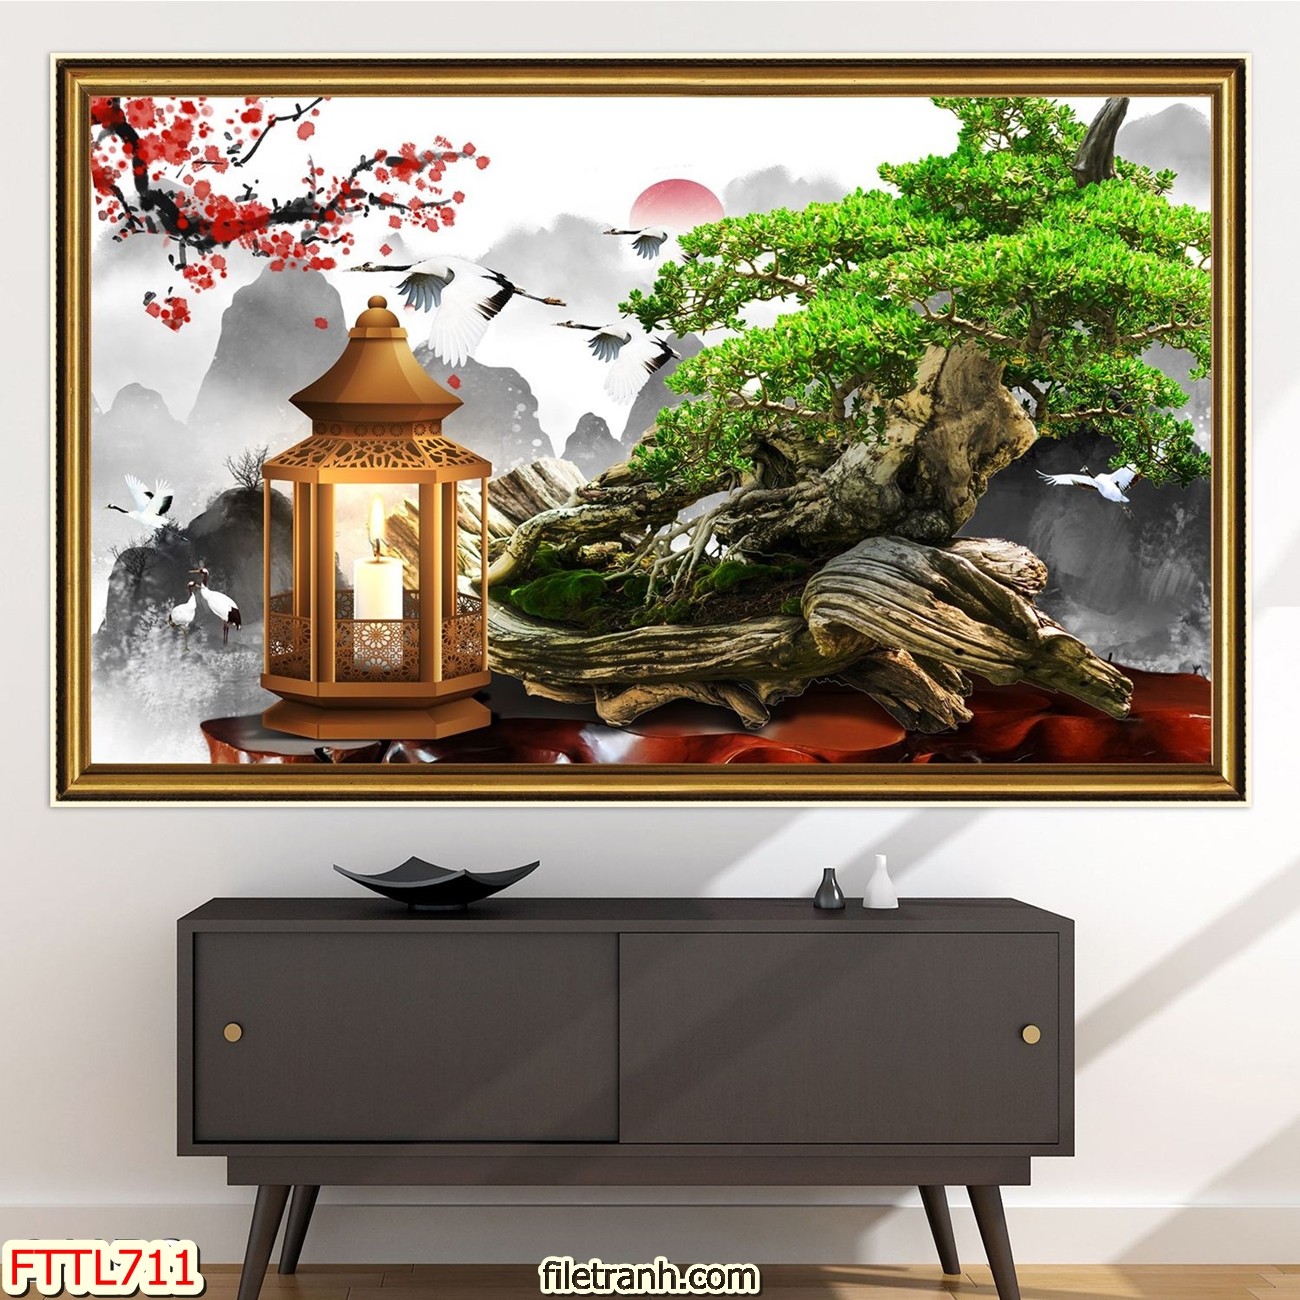 https://filetranh.com/file-tranh-chau-mai-bonsai/file-tranh-chau-mai-bonsai-fttl711.html